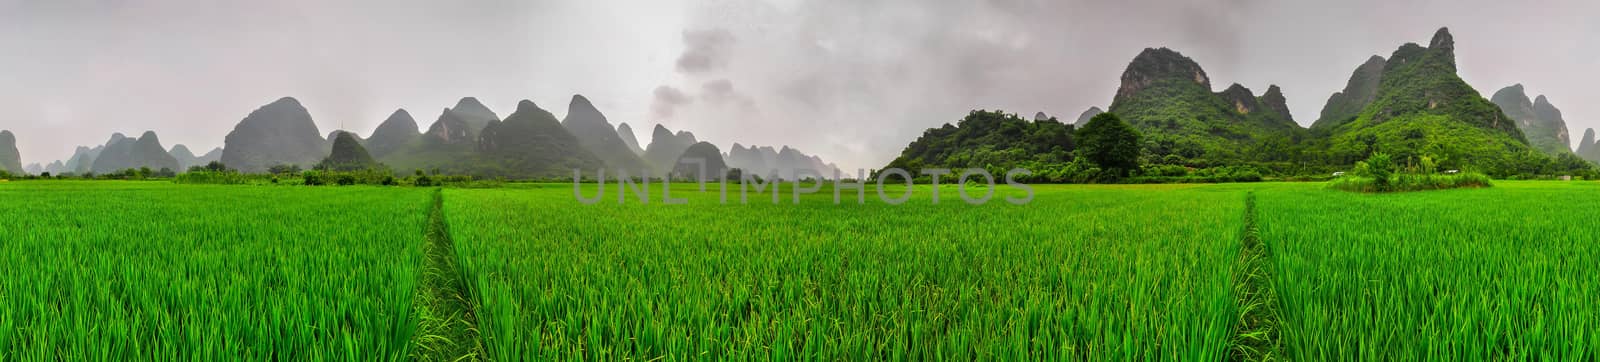 Yangshuo Parorama ricefields, karst mountain landscape, guilin,  by weltreisendertj